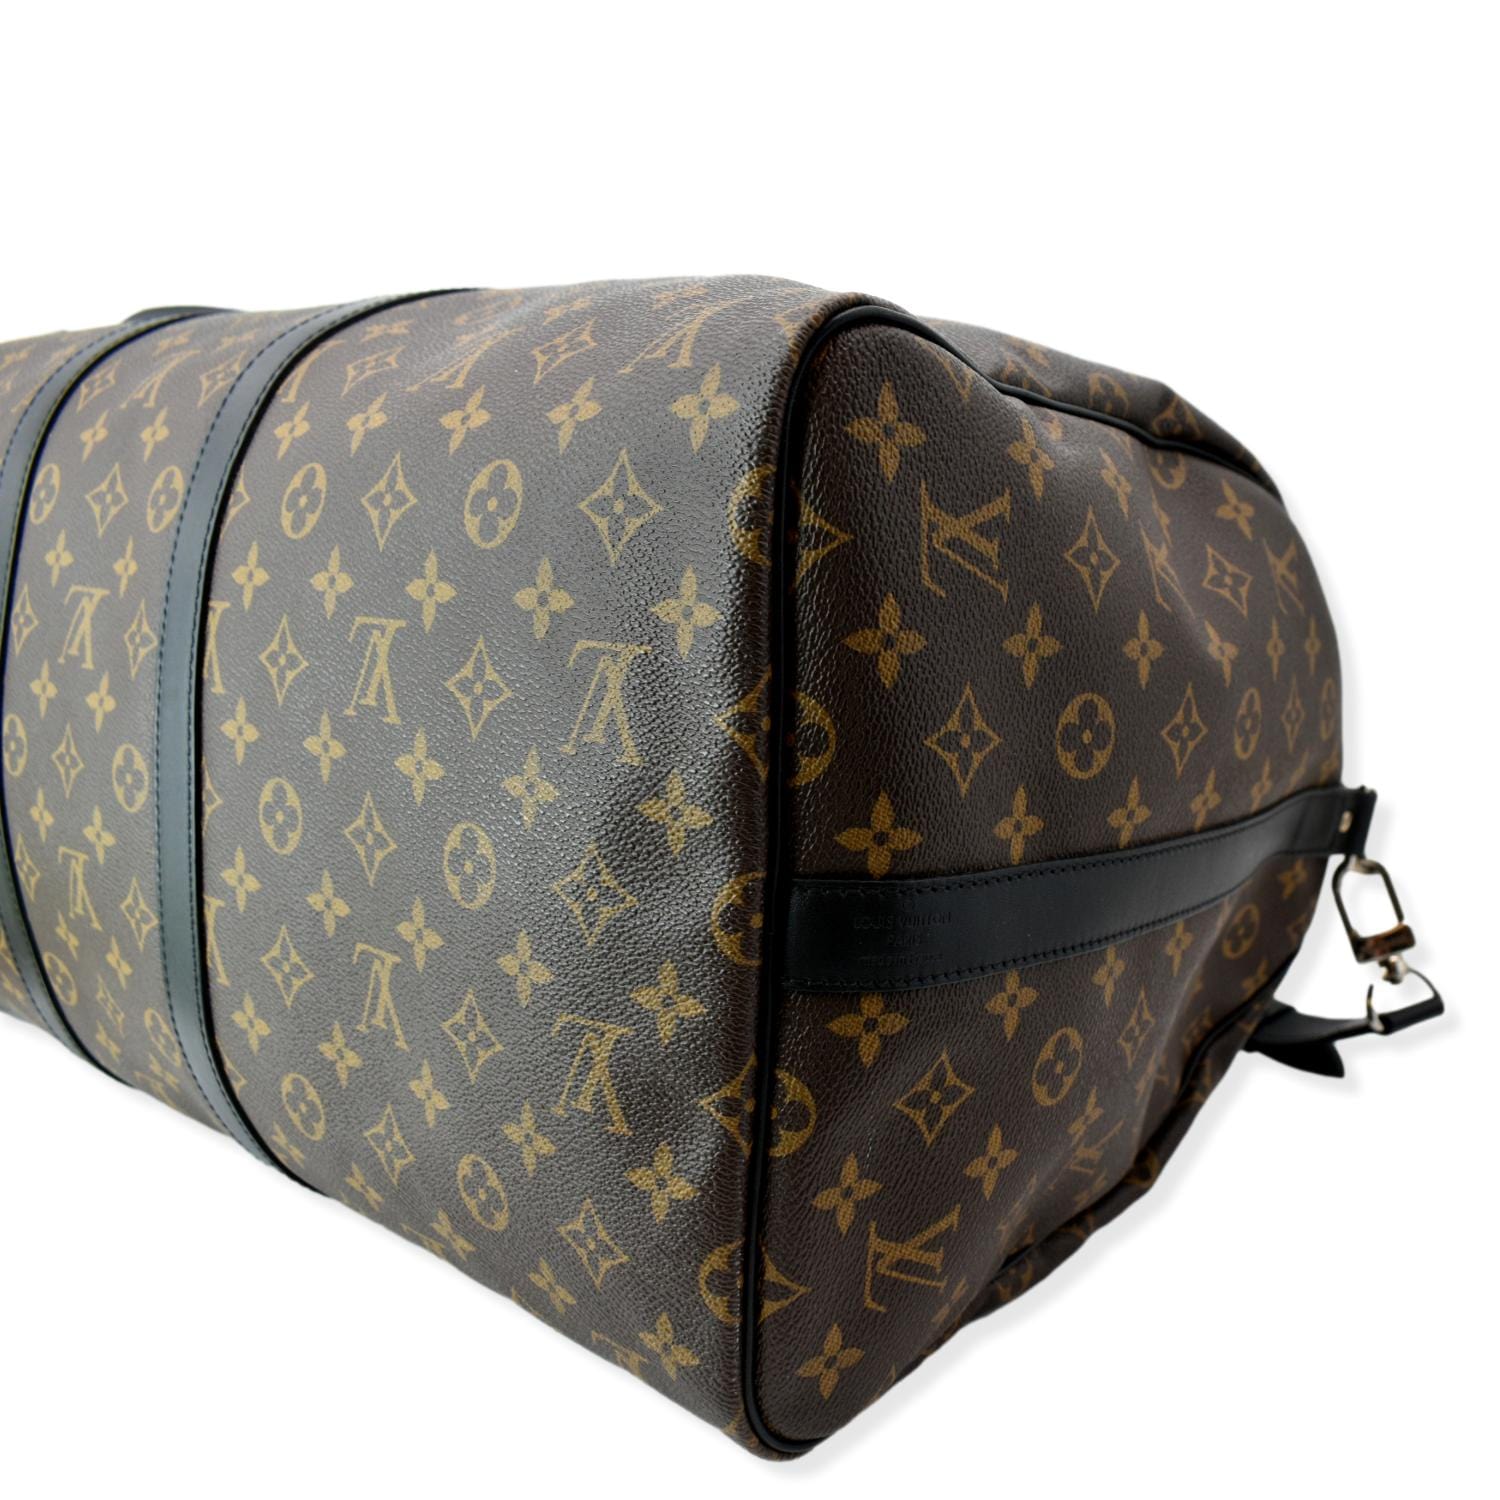 Louis Vuitton Limited Edition 127/200 Dubai Keepall Bandouliere 55